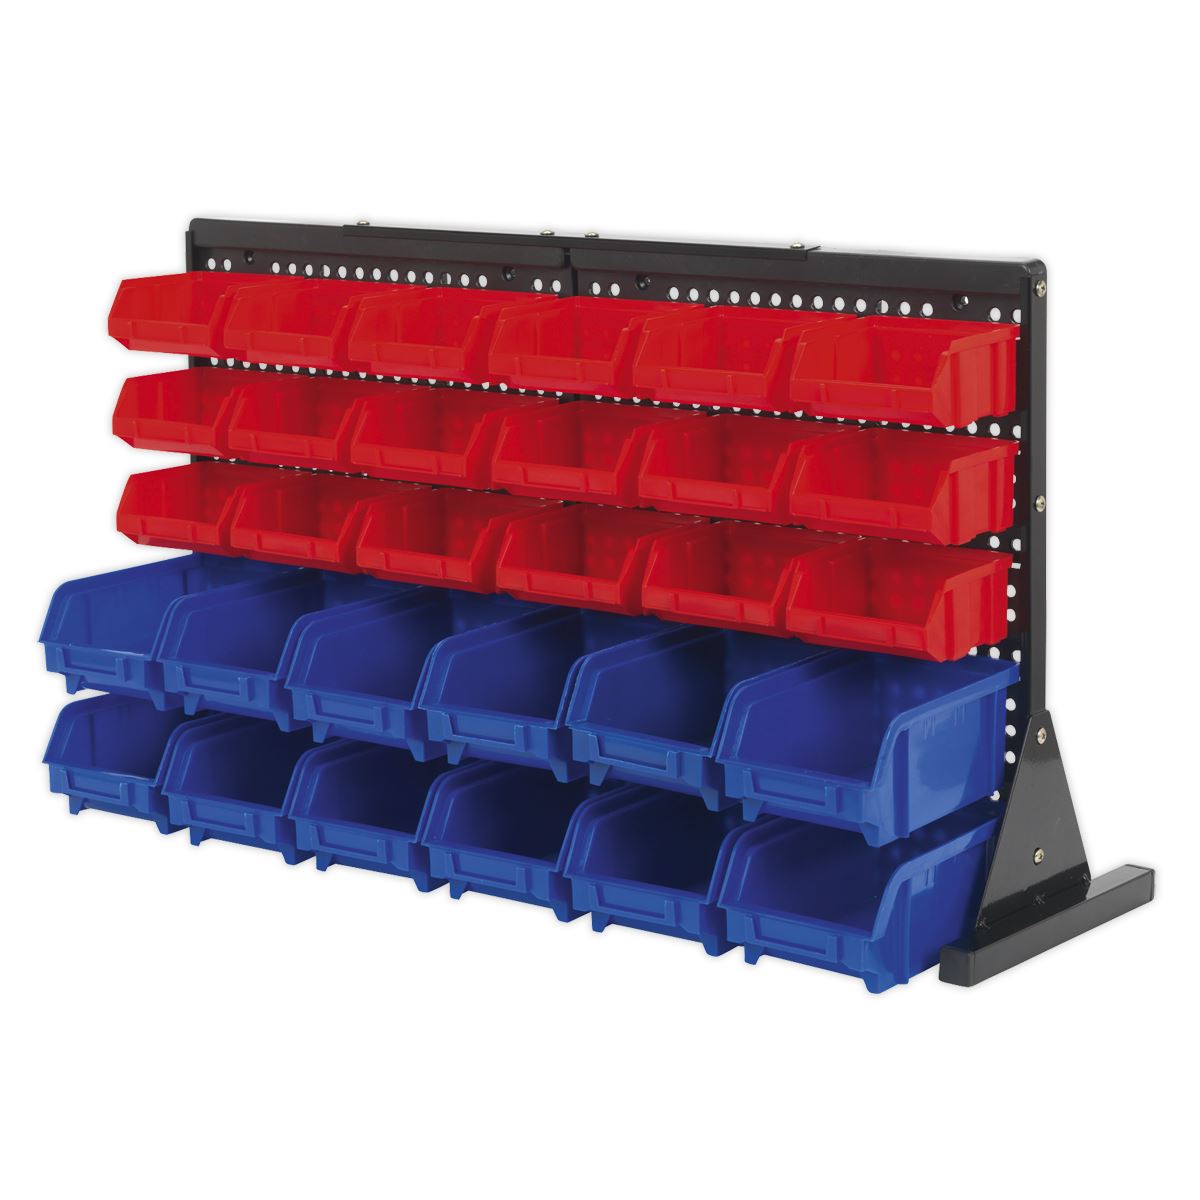 Sealey Bin Storage System Bench Mounting 30 Bins